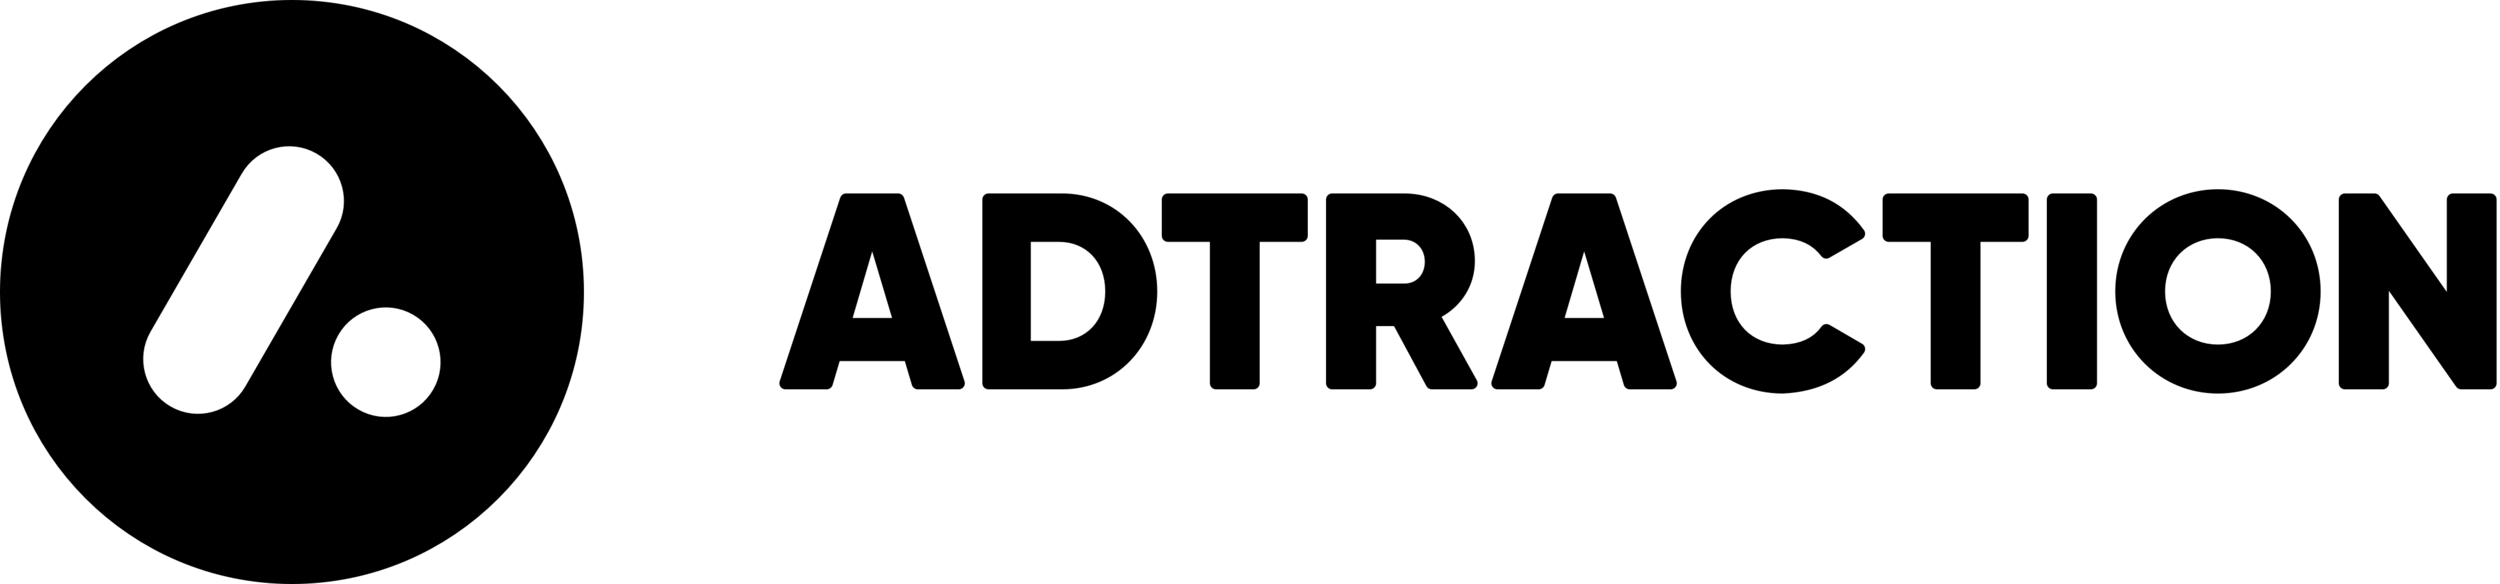 adtraction-black-logo-horizontal.png